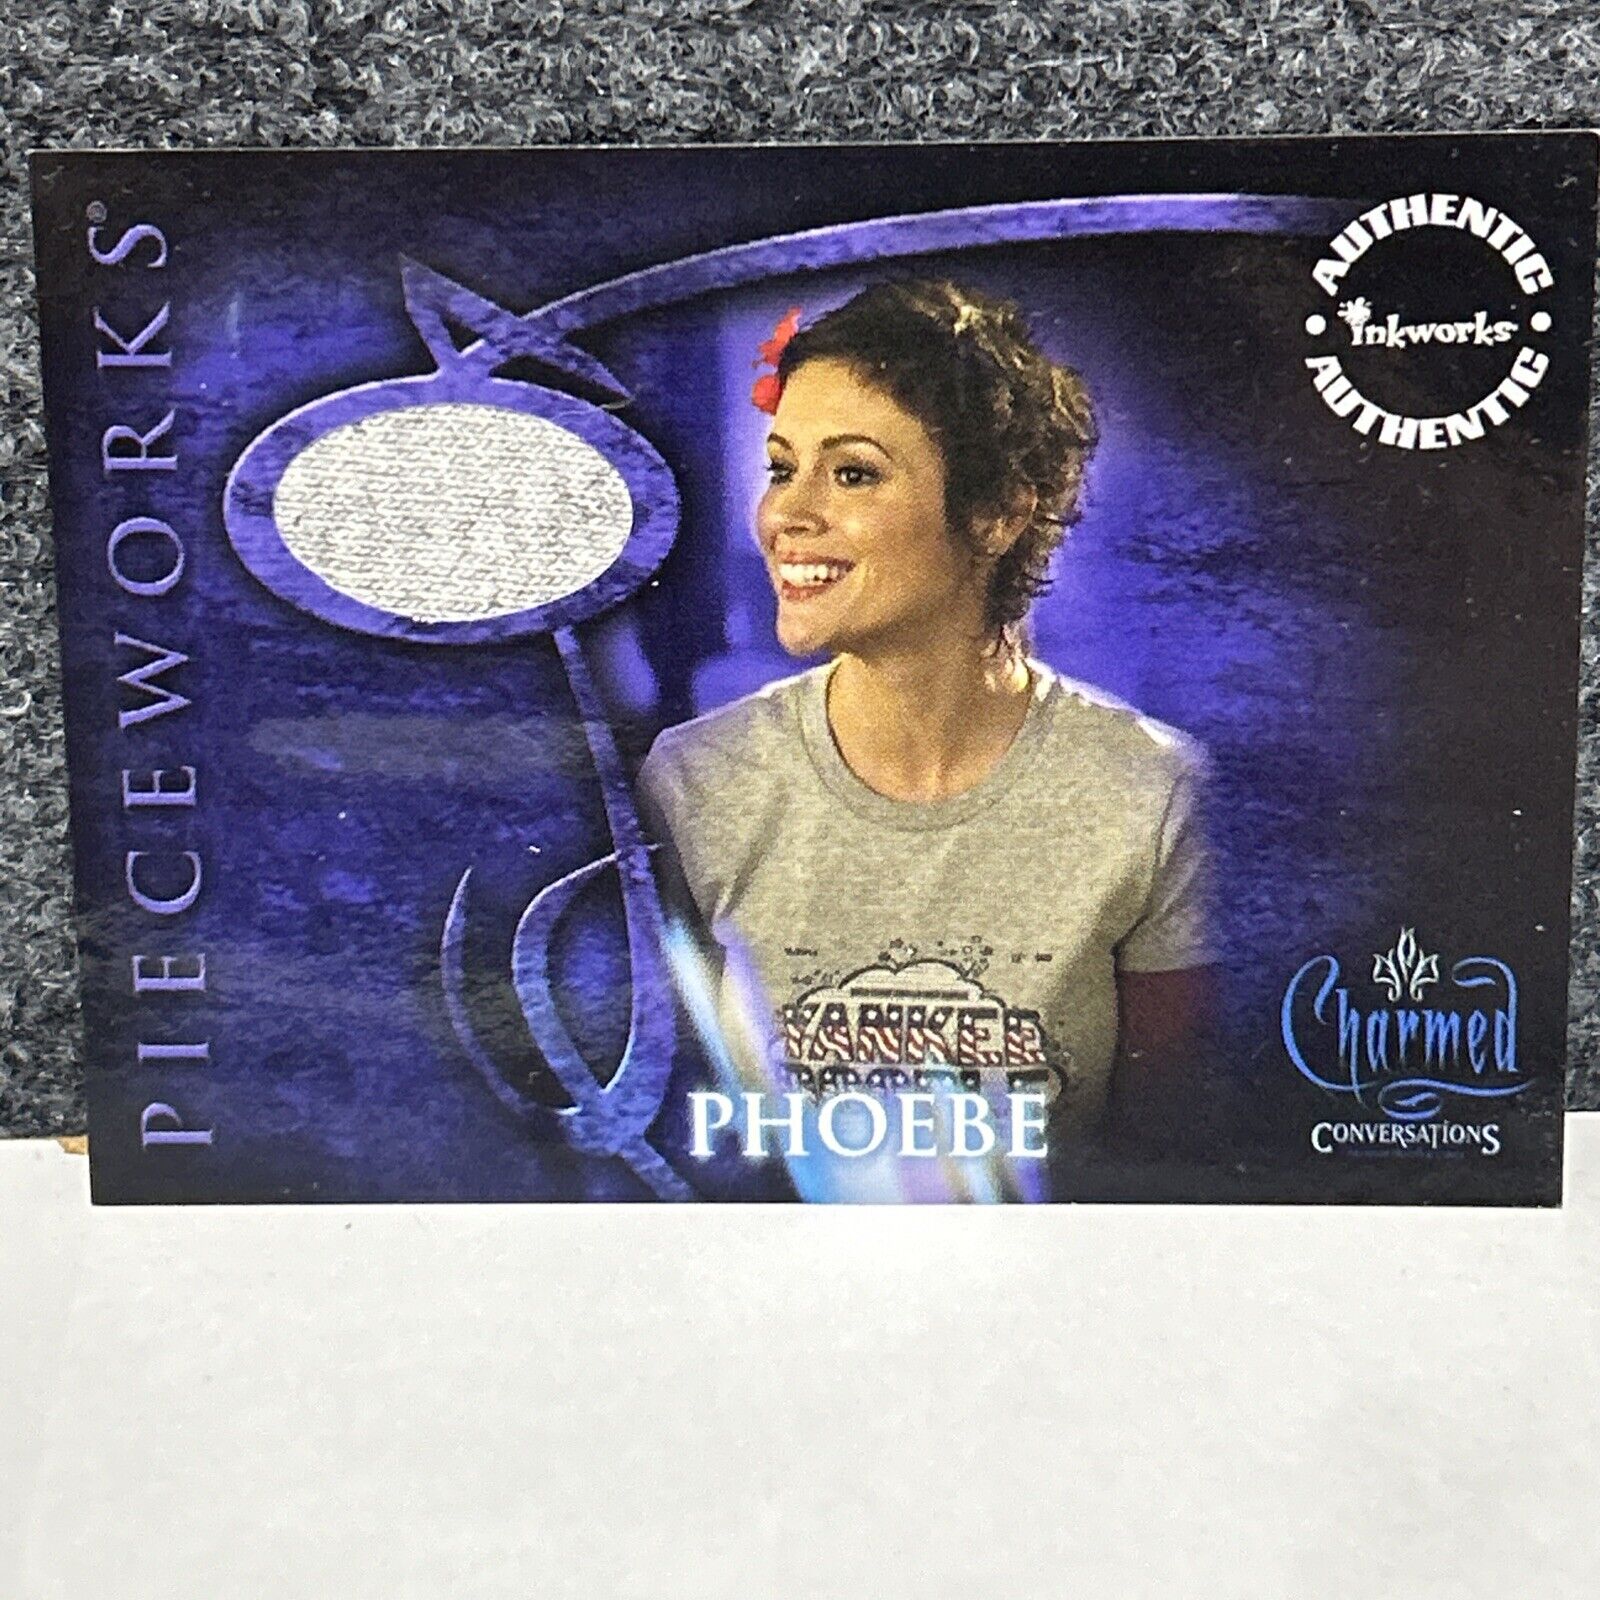 Charmed Conversations Pieceworks Card PWCC1 Alyssa Milano as Phoebe - Inkworks